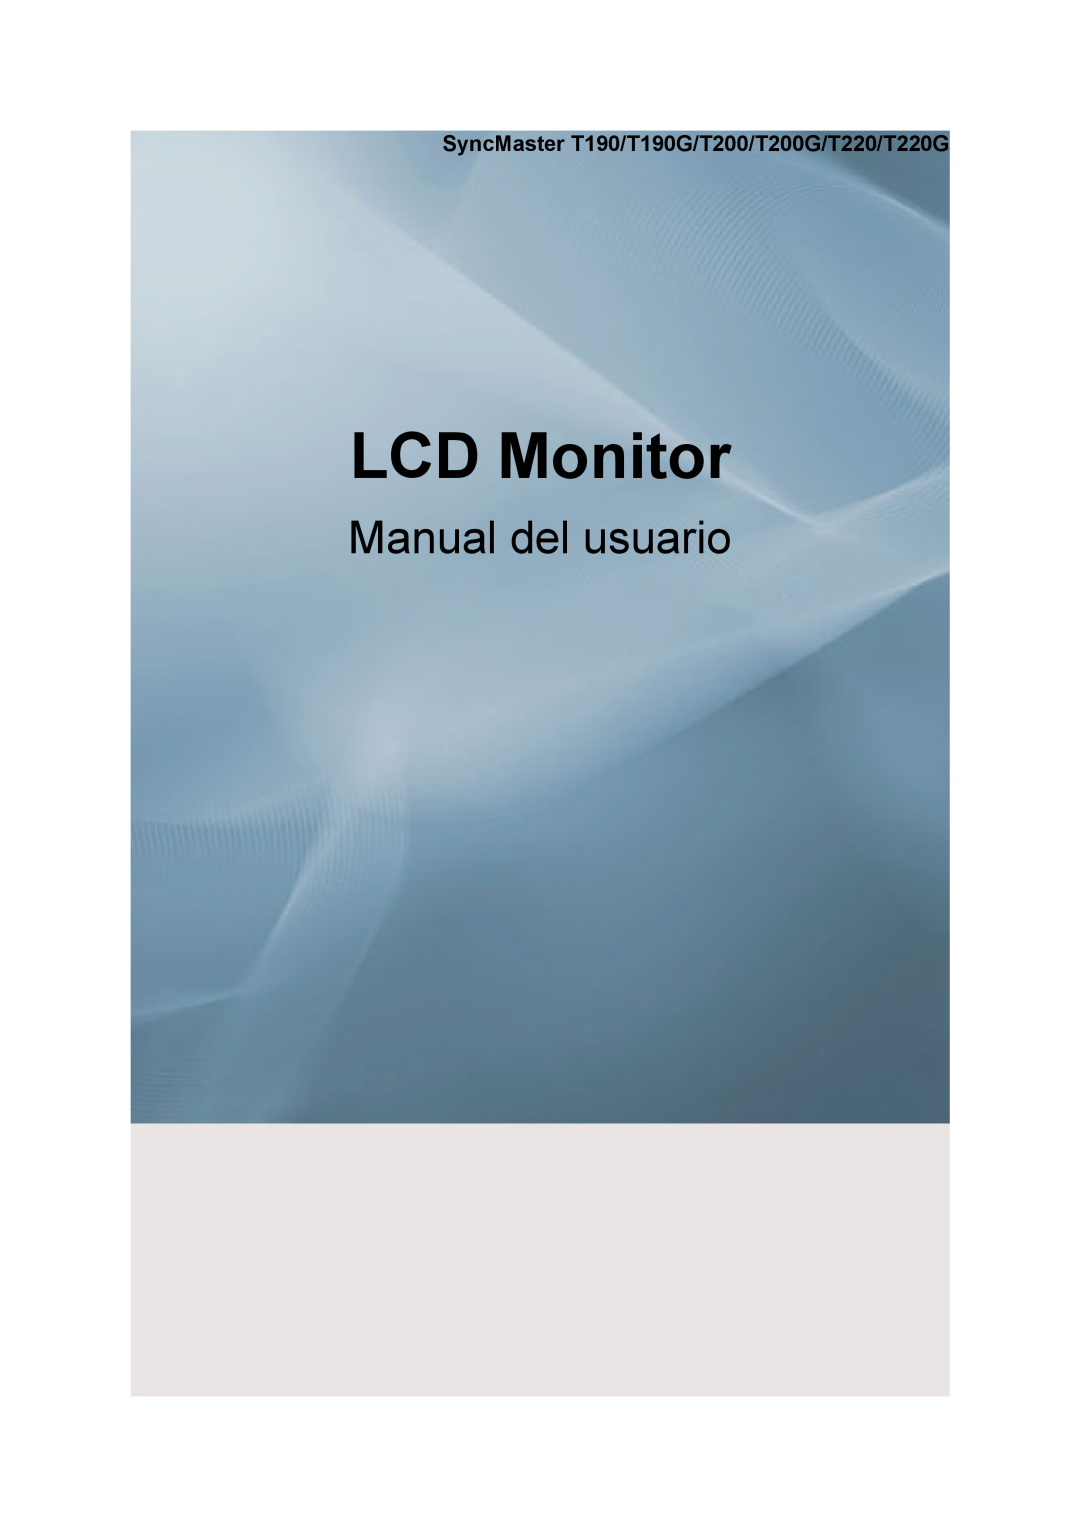 Samsung manual SyncMaster T190/T190G/T200/T200G/T220/T220G, LCD Monitor, Manual del usuario 